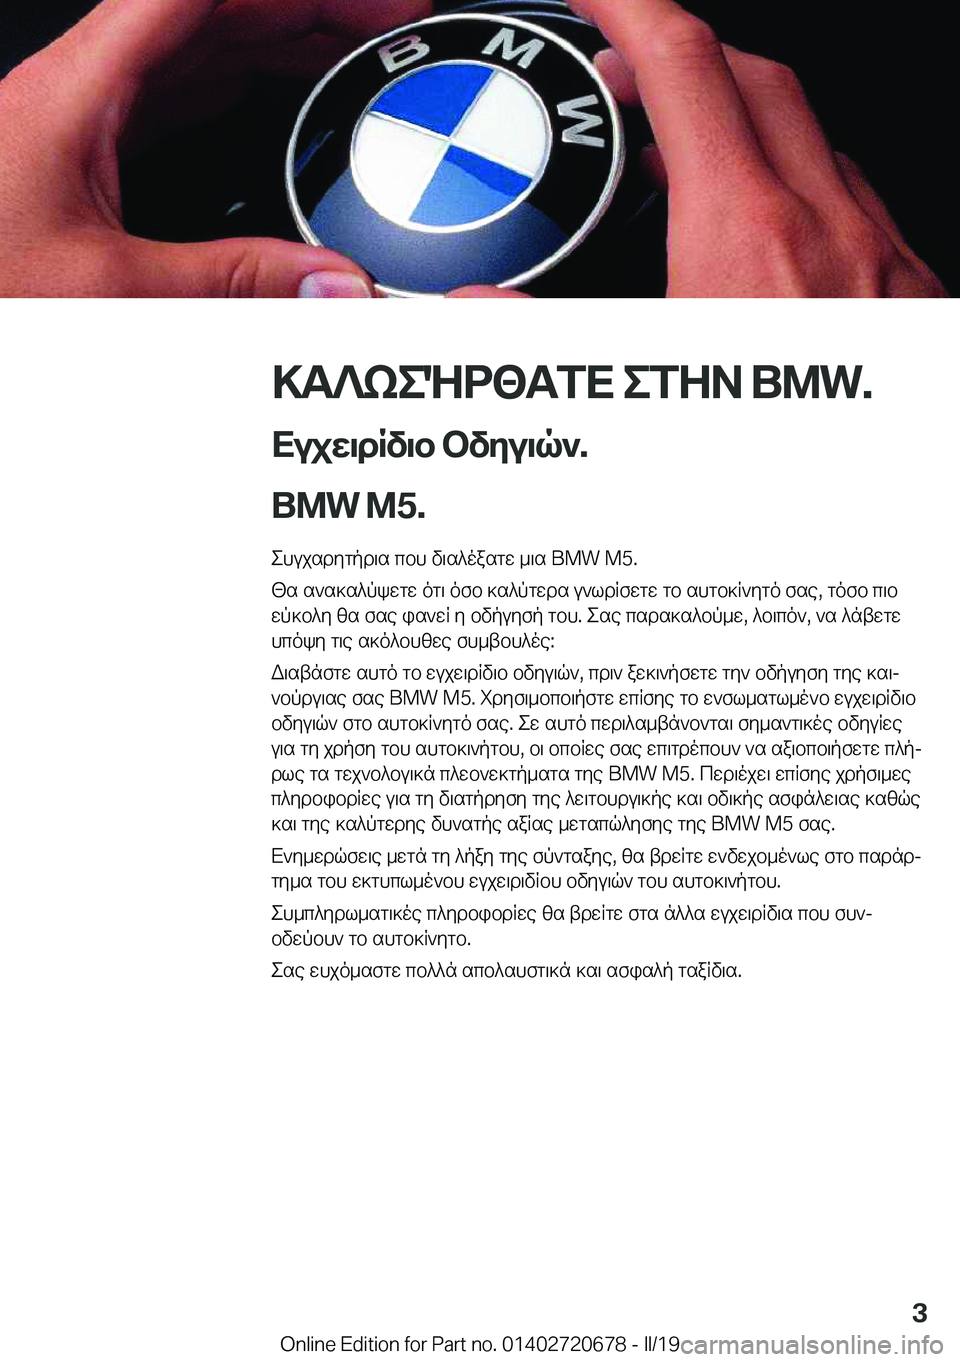 BMW M5 2019  ΟΔΗΓΌΣ ΧΡΉΣΗΣ (in Greek) >T?keNd<TfX�efZA��B�M�W�.
Xujw\dRv\b�bvyu\q`�.
�B�M�W��M�5�. ehujsdygpd\s�cbh�v\s^oasgw�_\s��B�M�W��M�5�.[s�s`s]s^pkwg